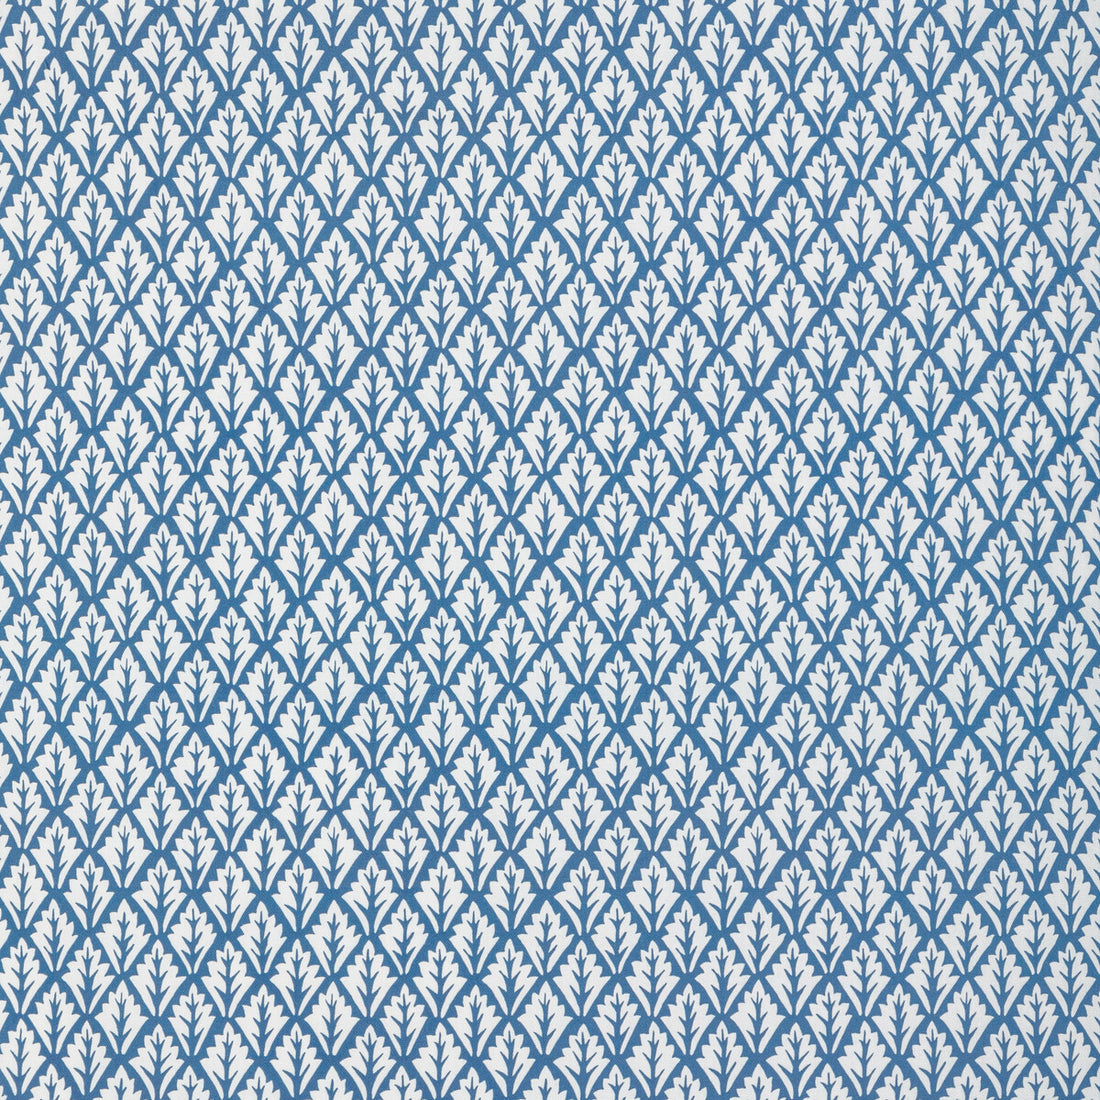 Dorso fabric in adriatic color - pattern DORSO.5.0 - by Kravet Basics